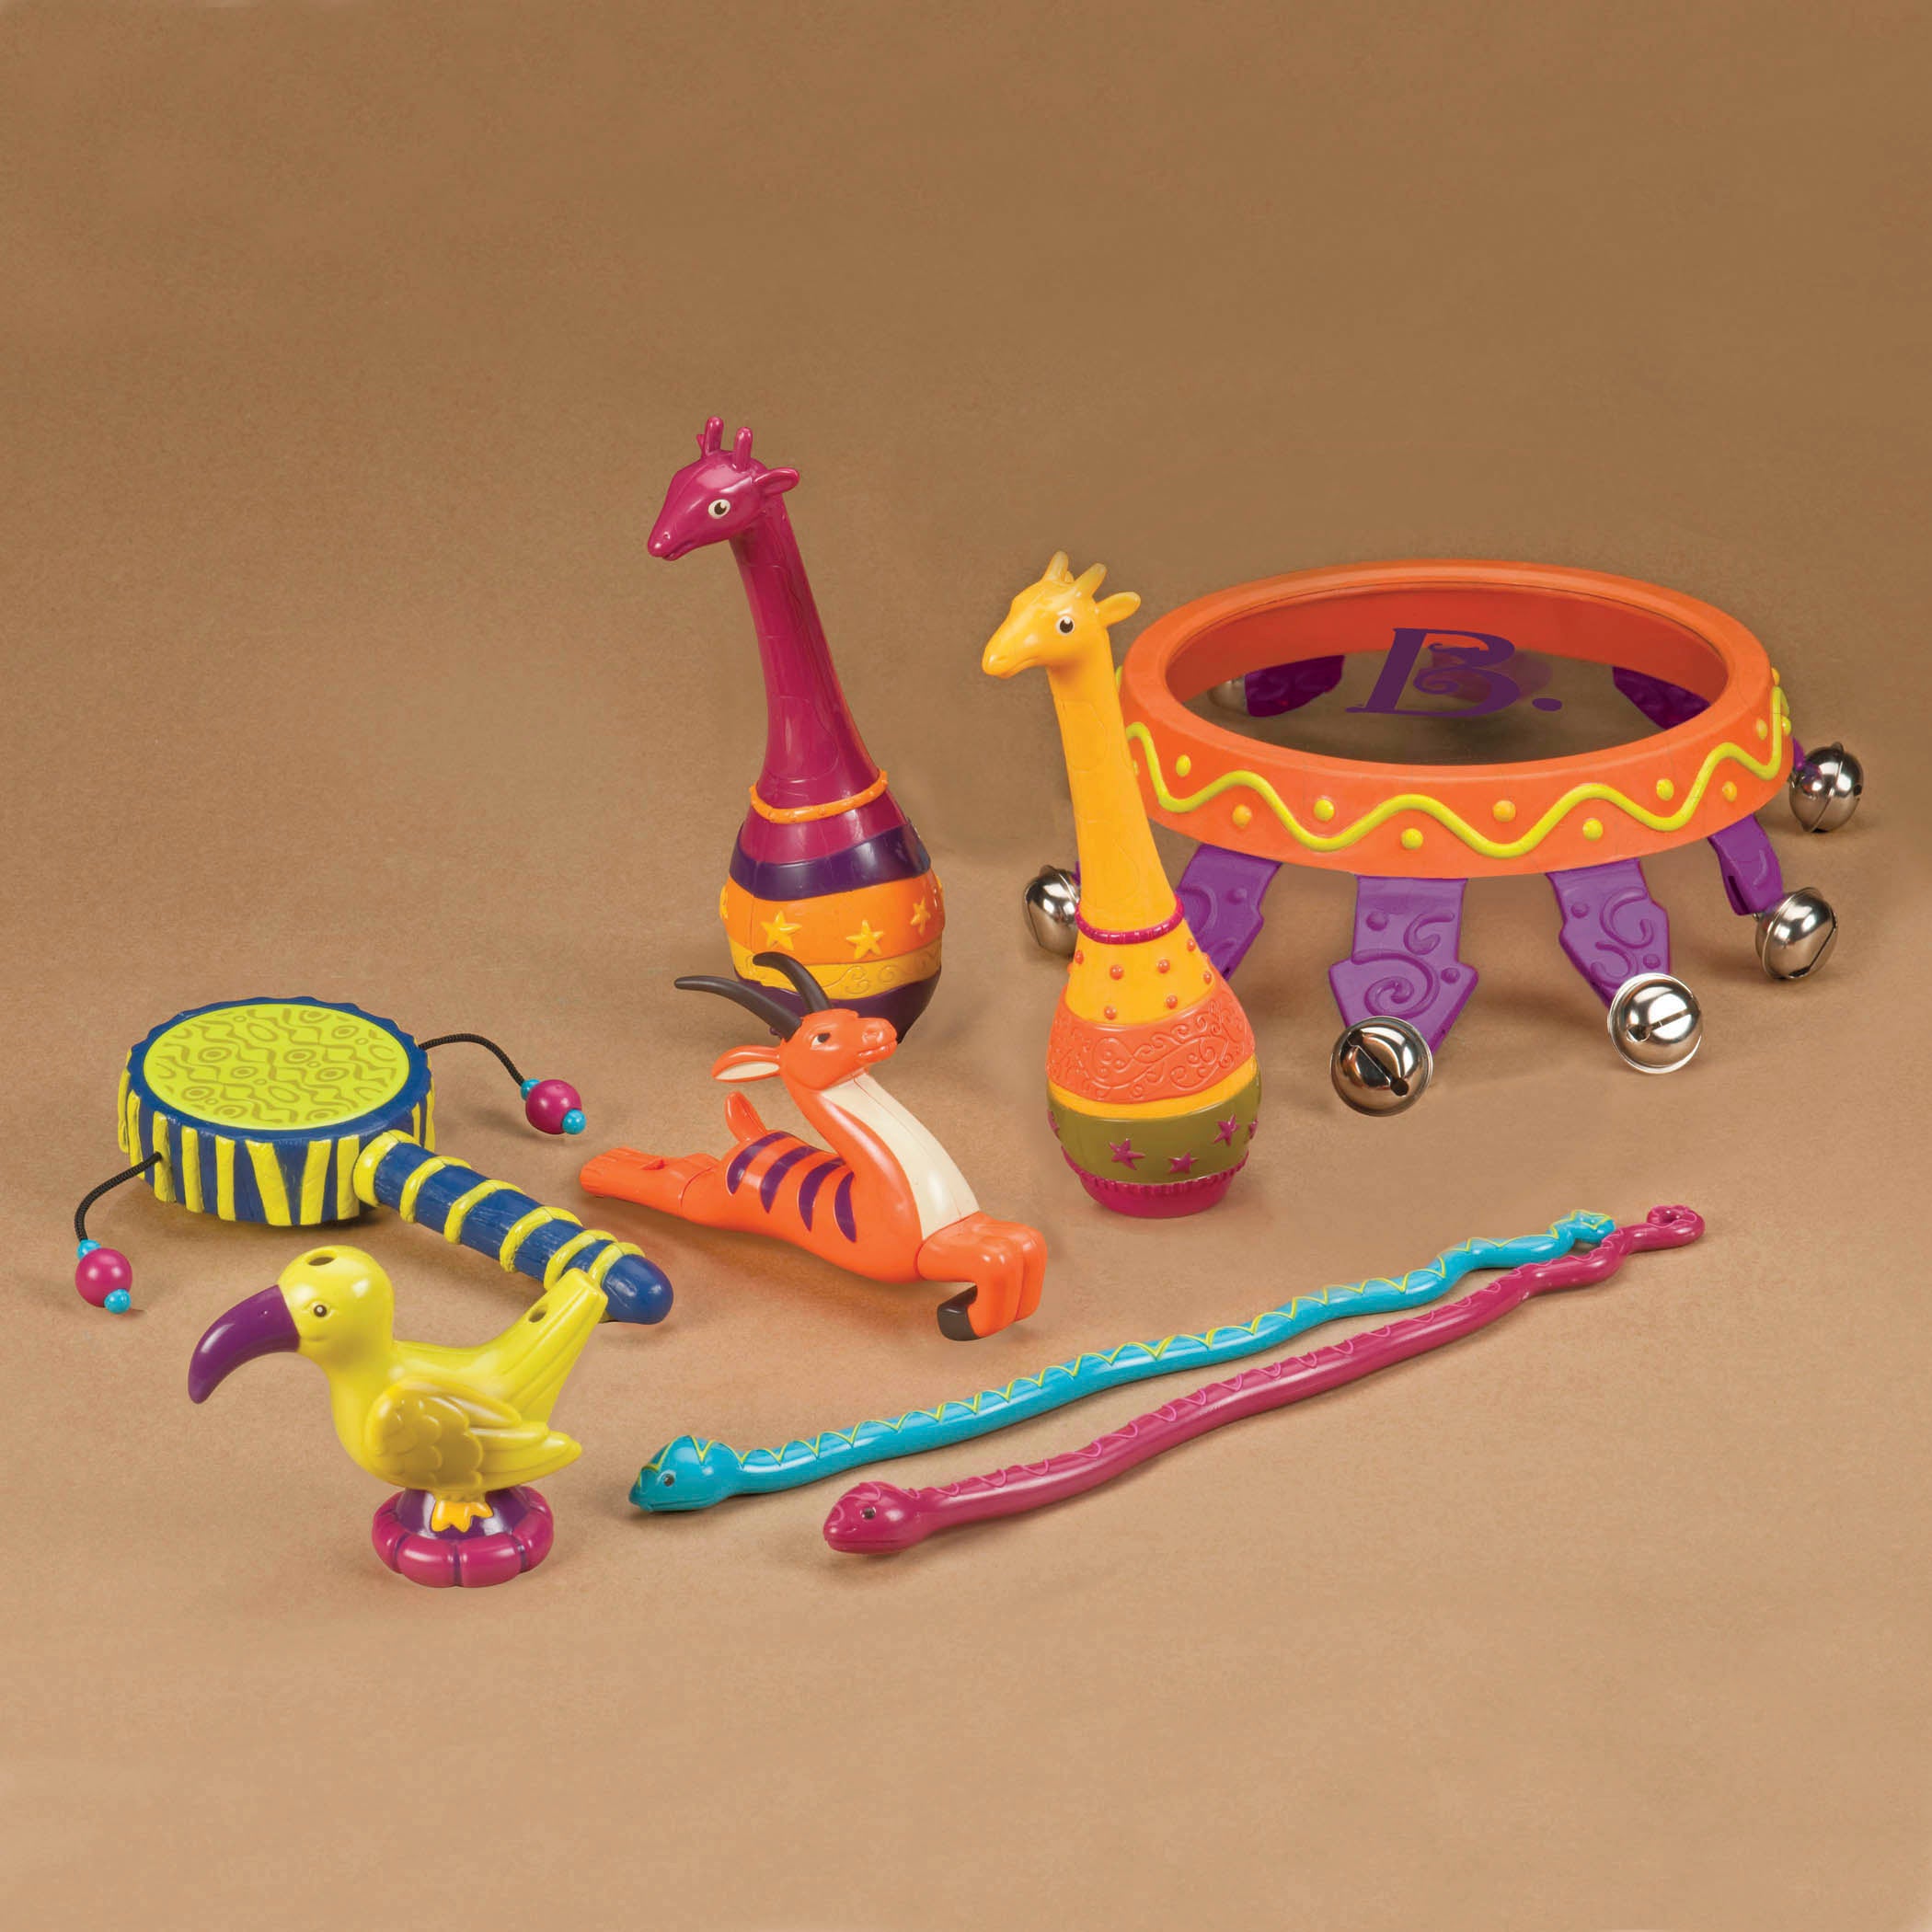 Jungle-themed instrument set